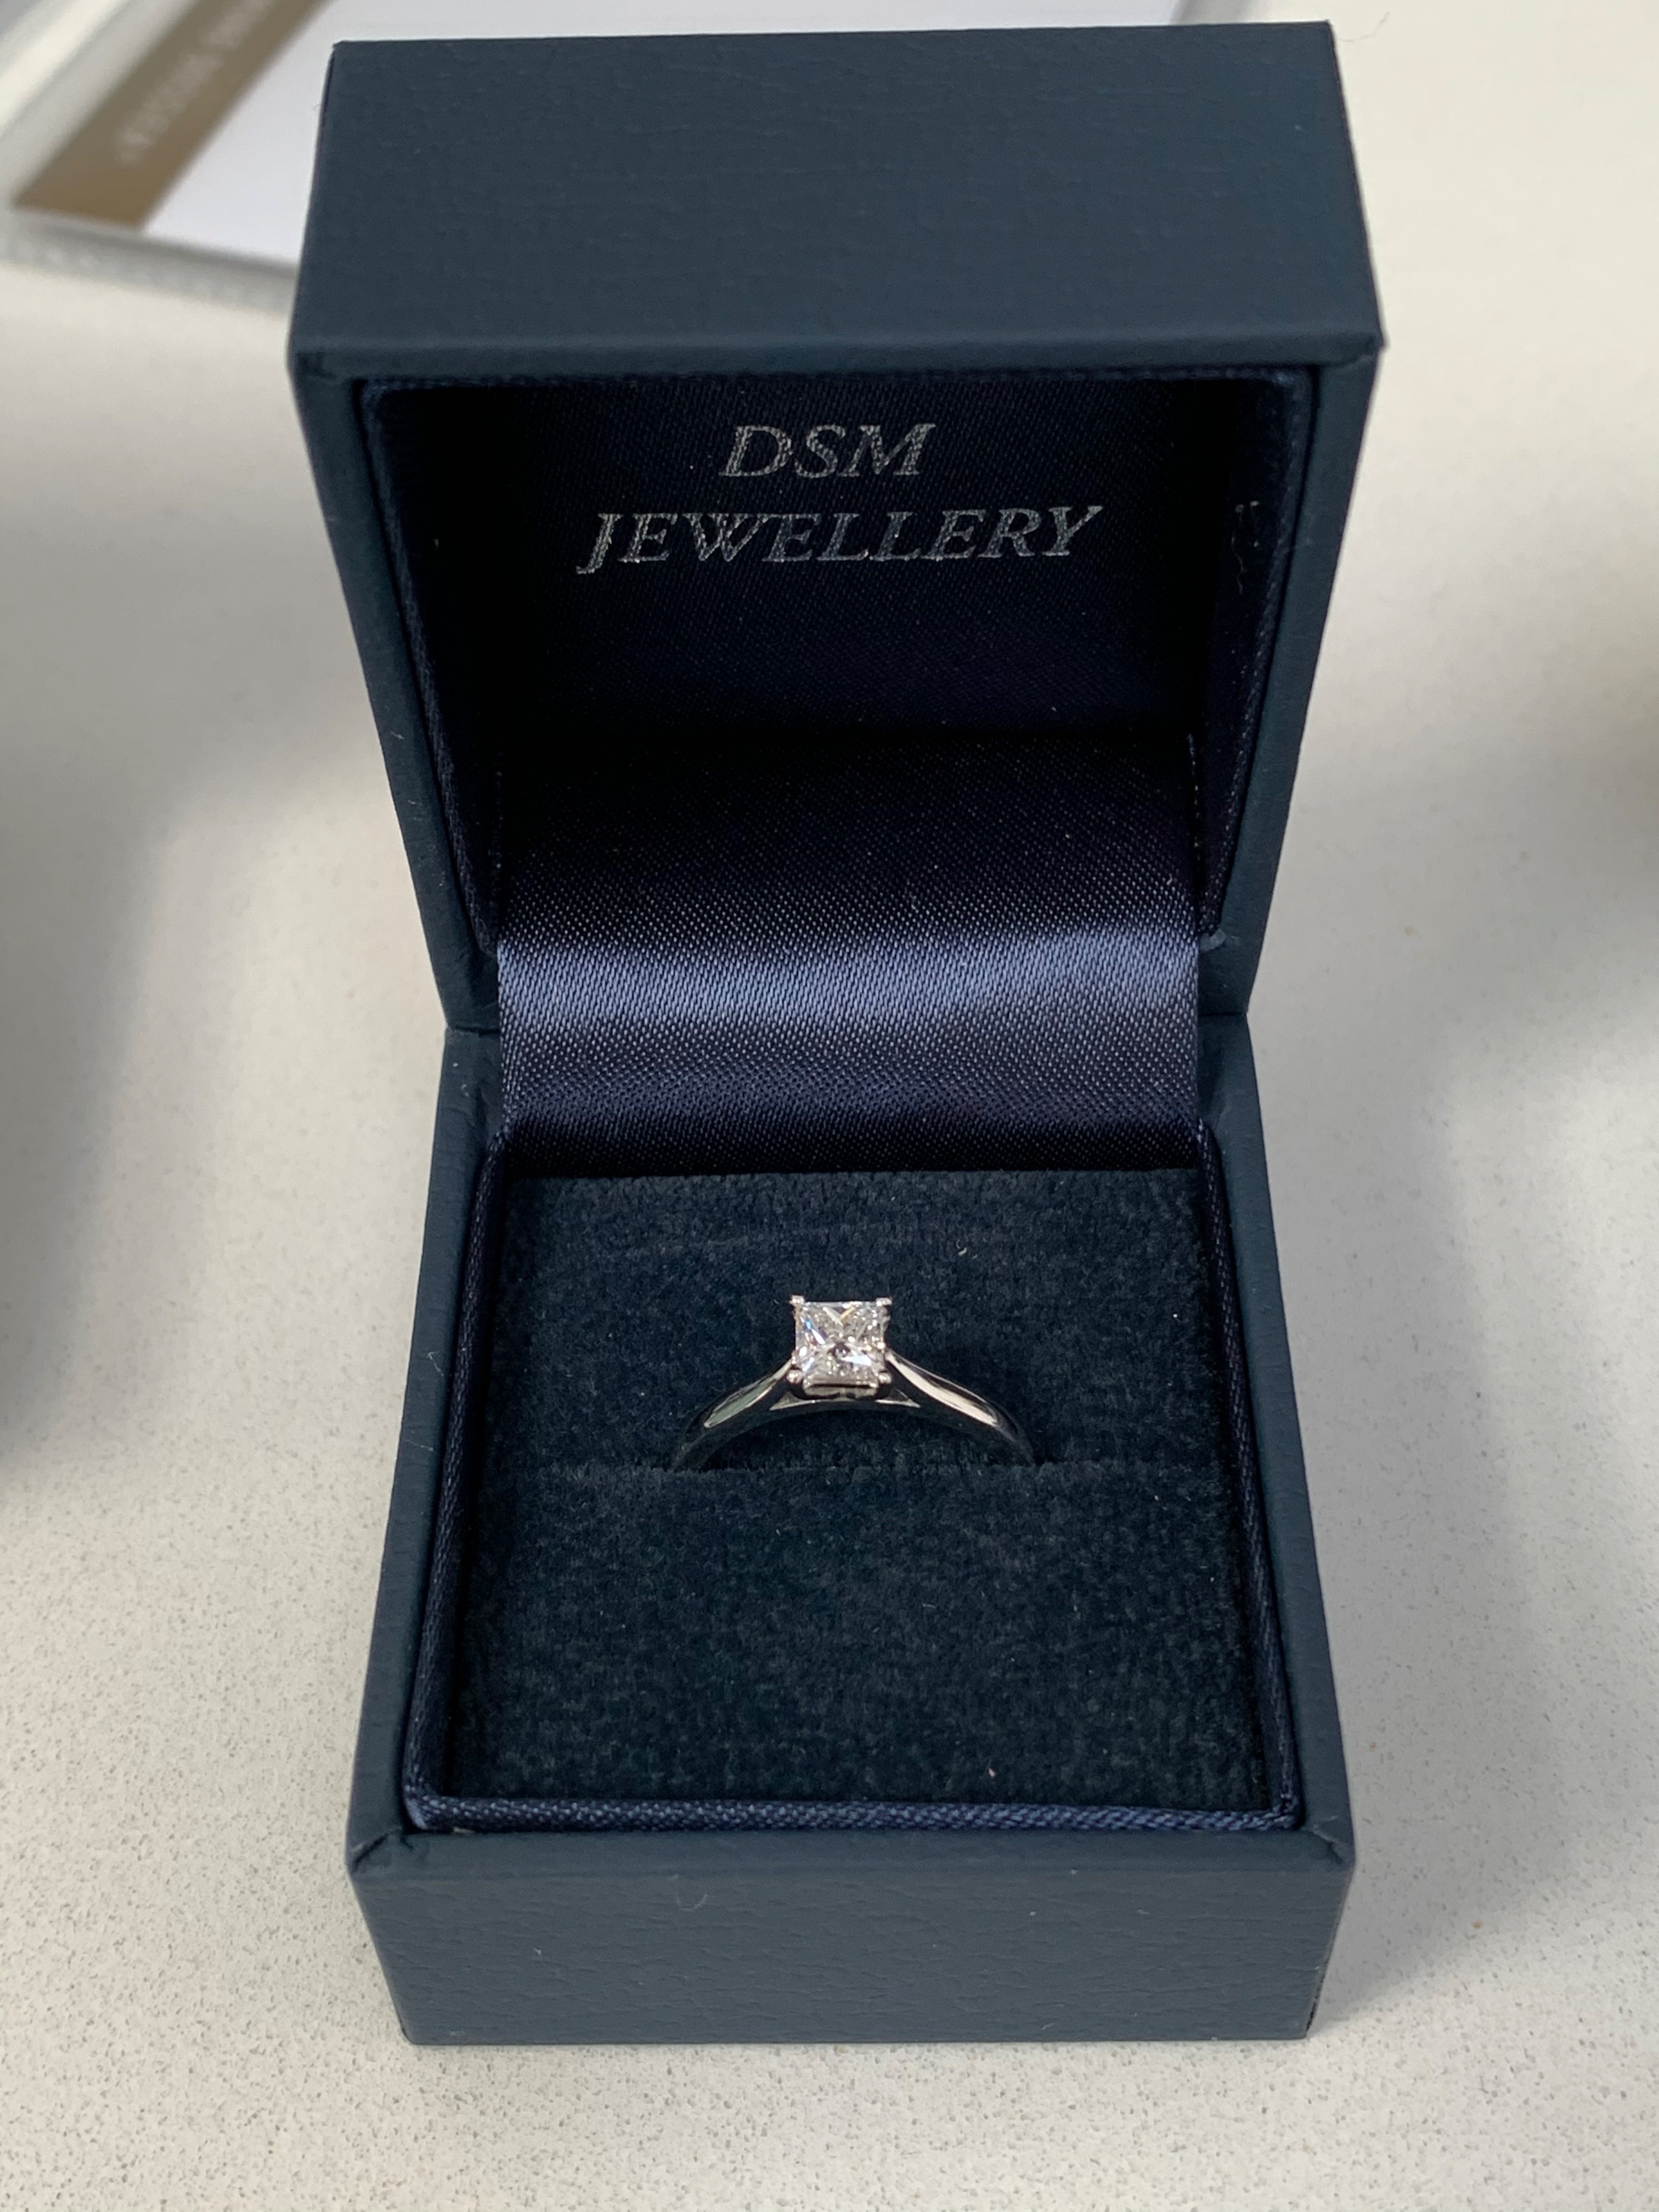 DSM Jewellery